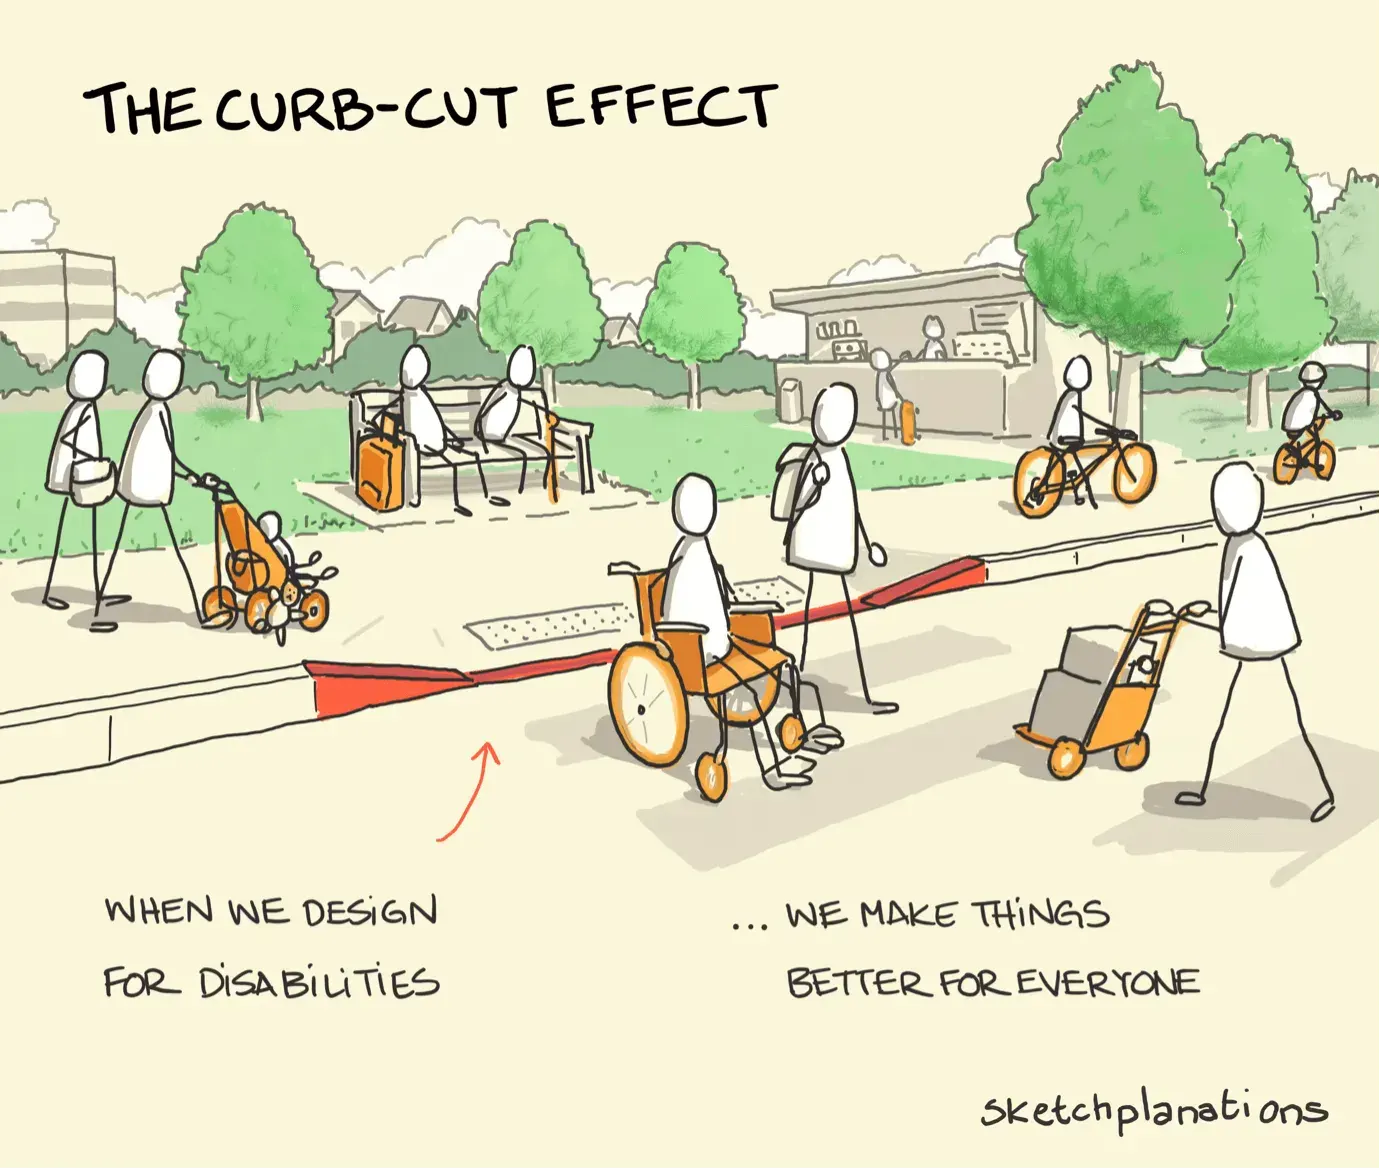 The curb-cut effect